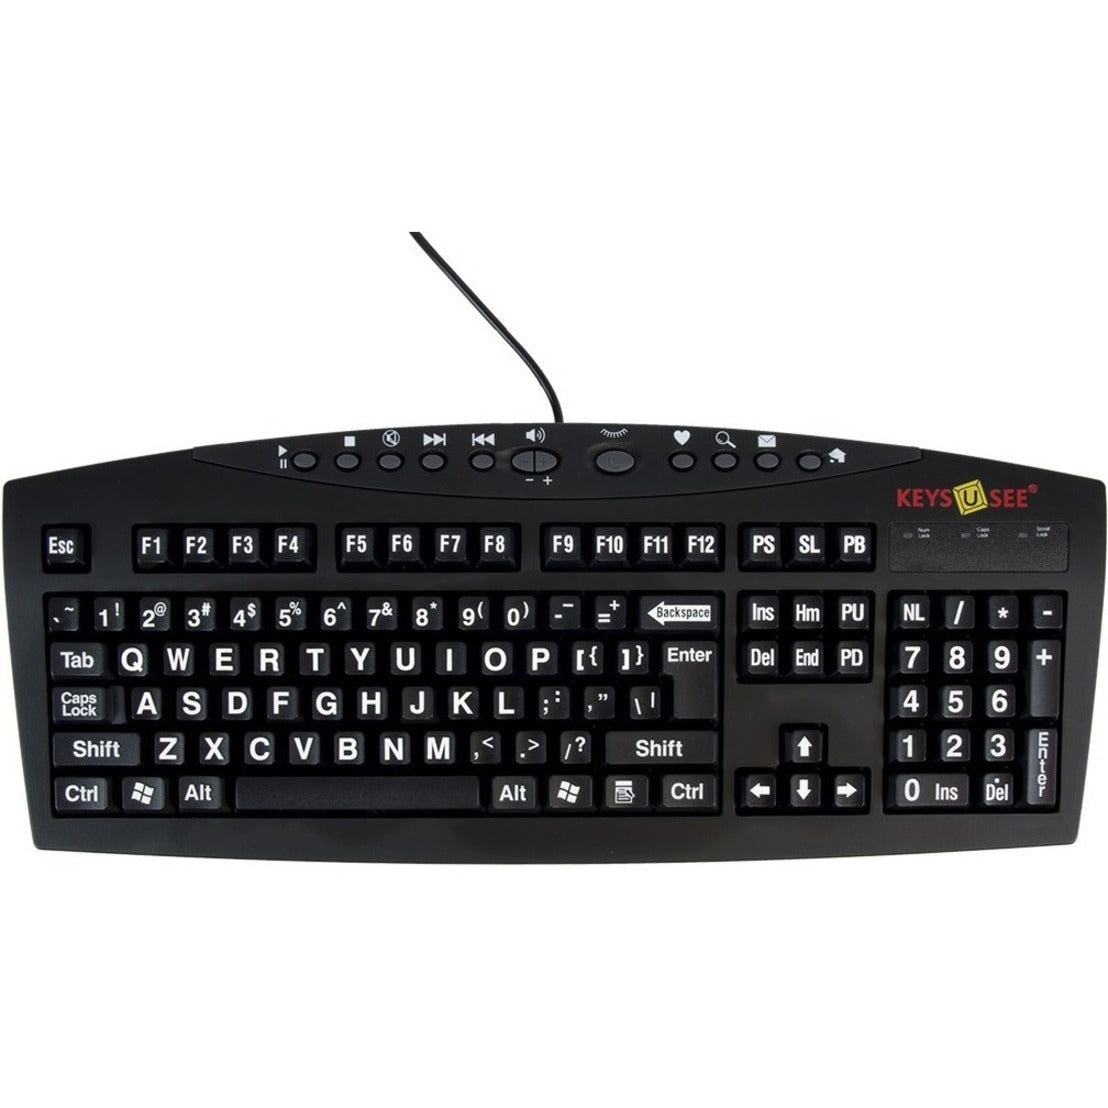 Ablenet 10090104 Keys-U-See Keyboard, Large Print Wired Keyboard, White Print on Black Keys